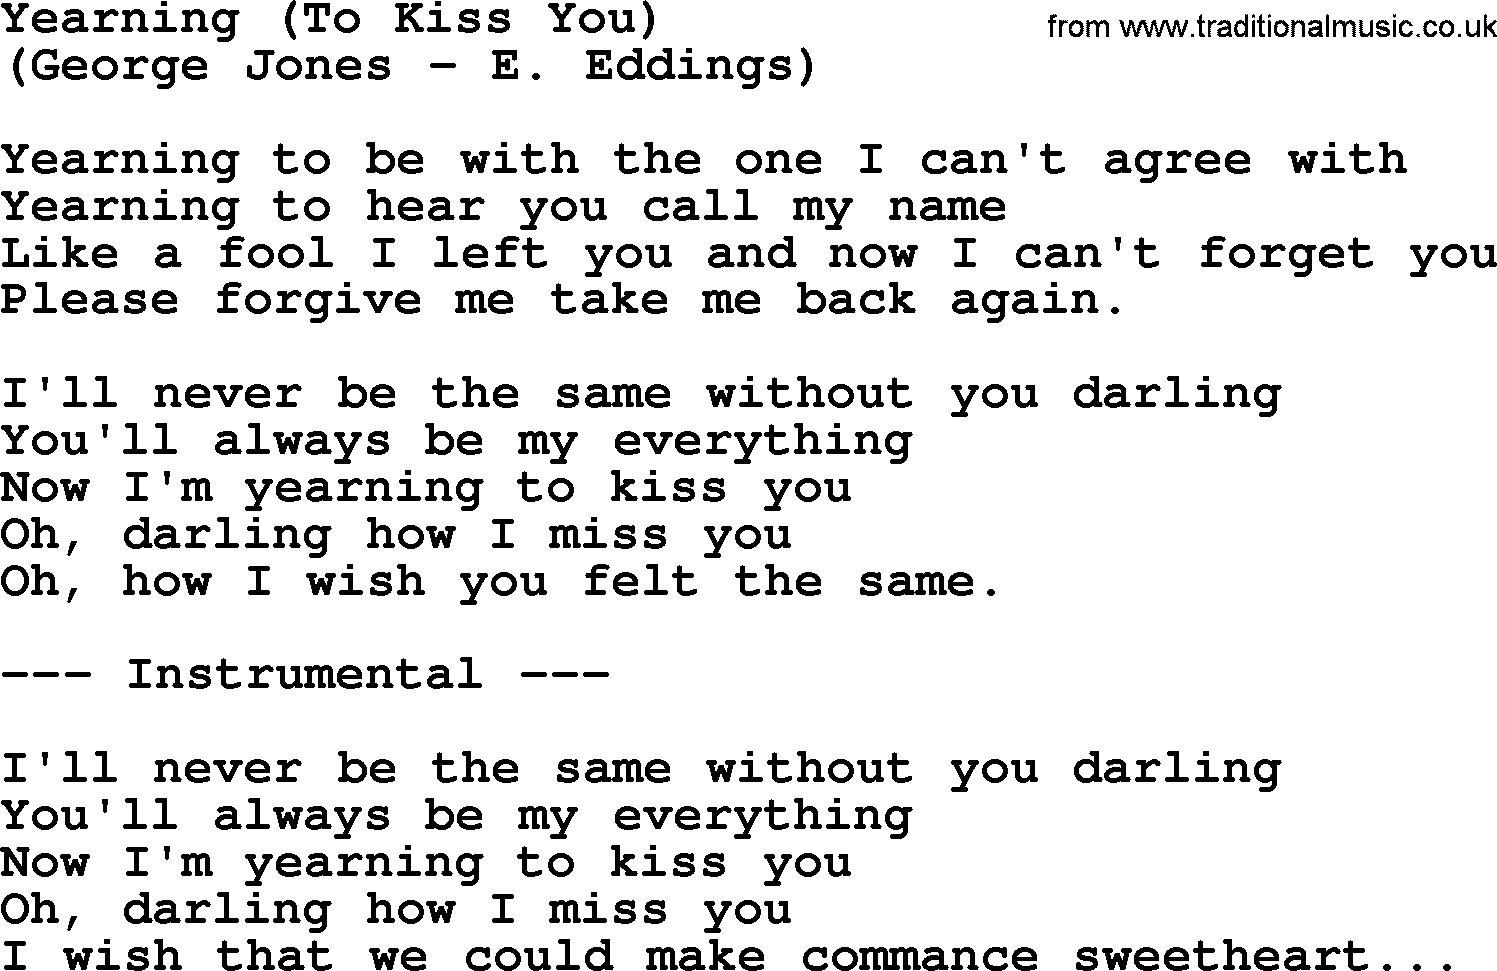 George Jones song: Yearning (to Kiss You), lyrics